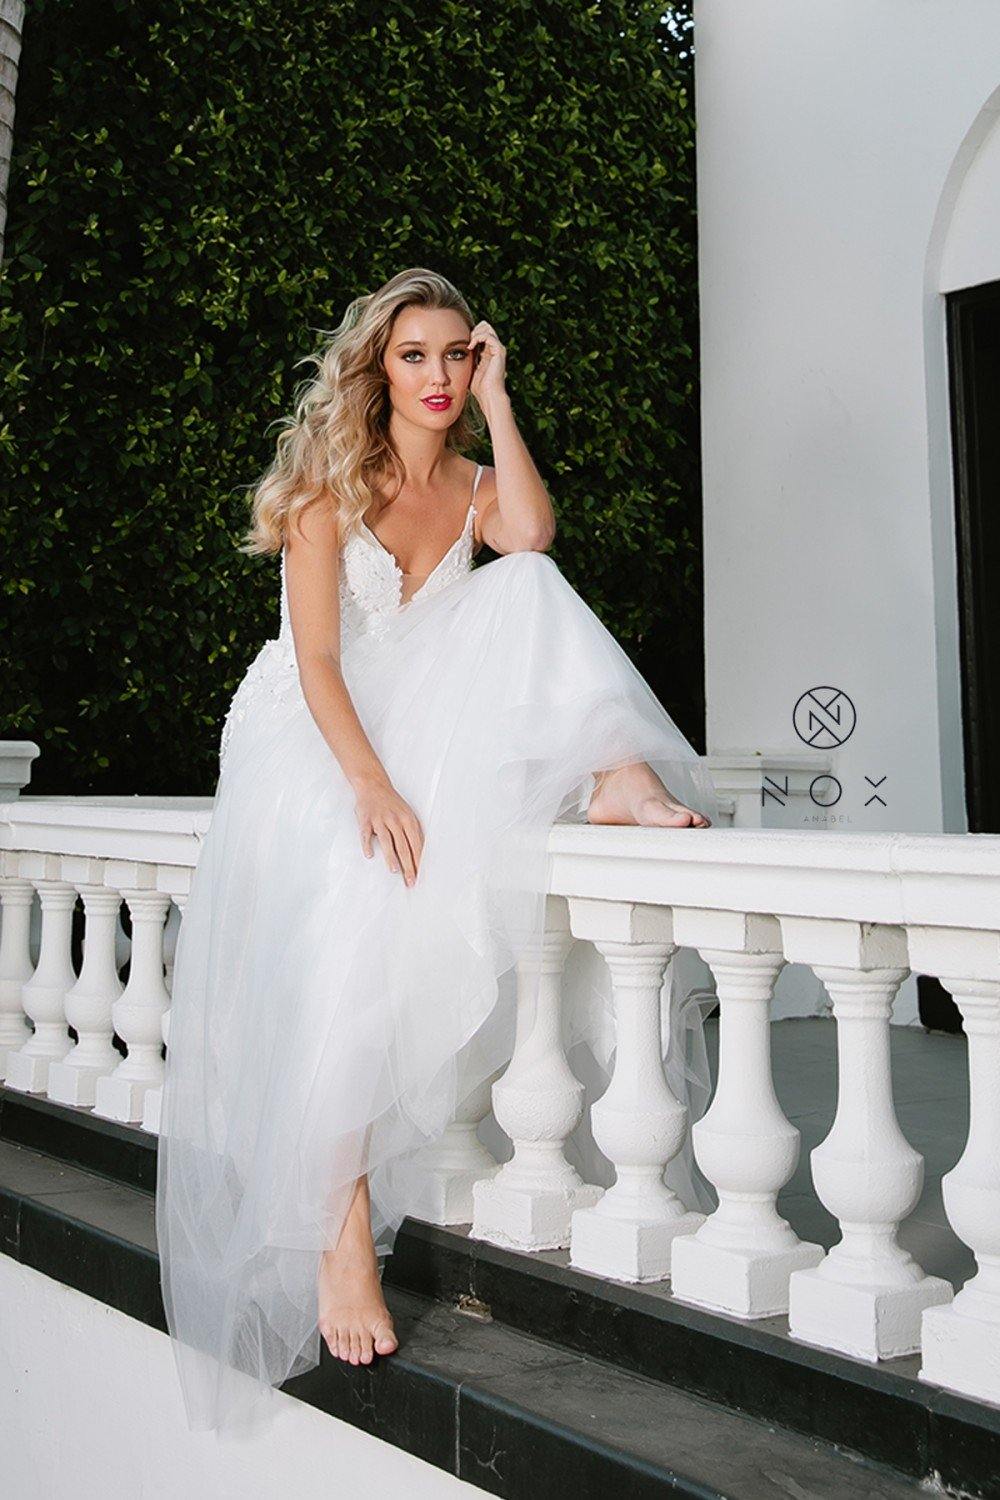 Long Wedding Dress Formal - The Dress Outlet Nox Anabel